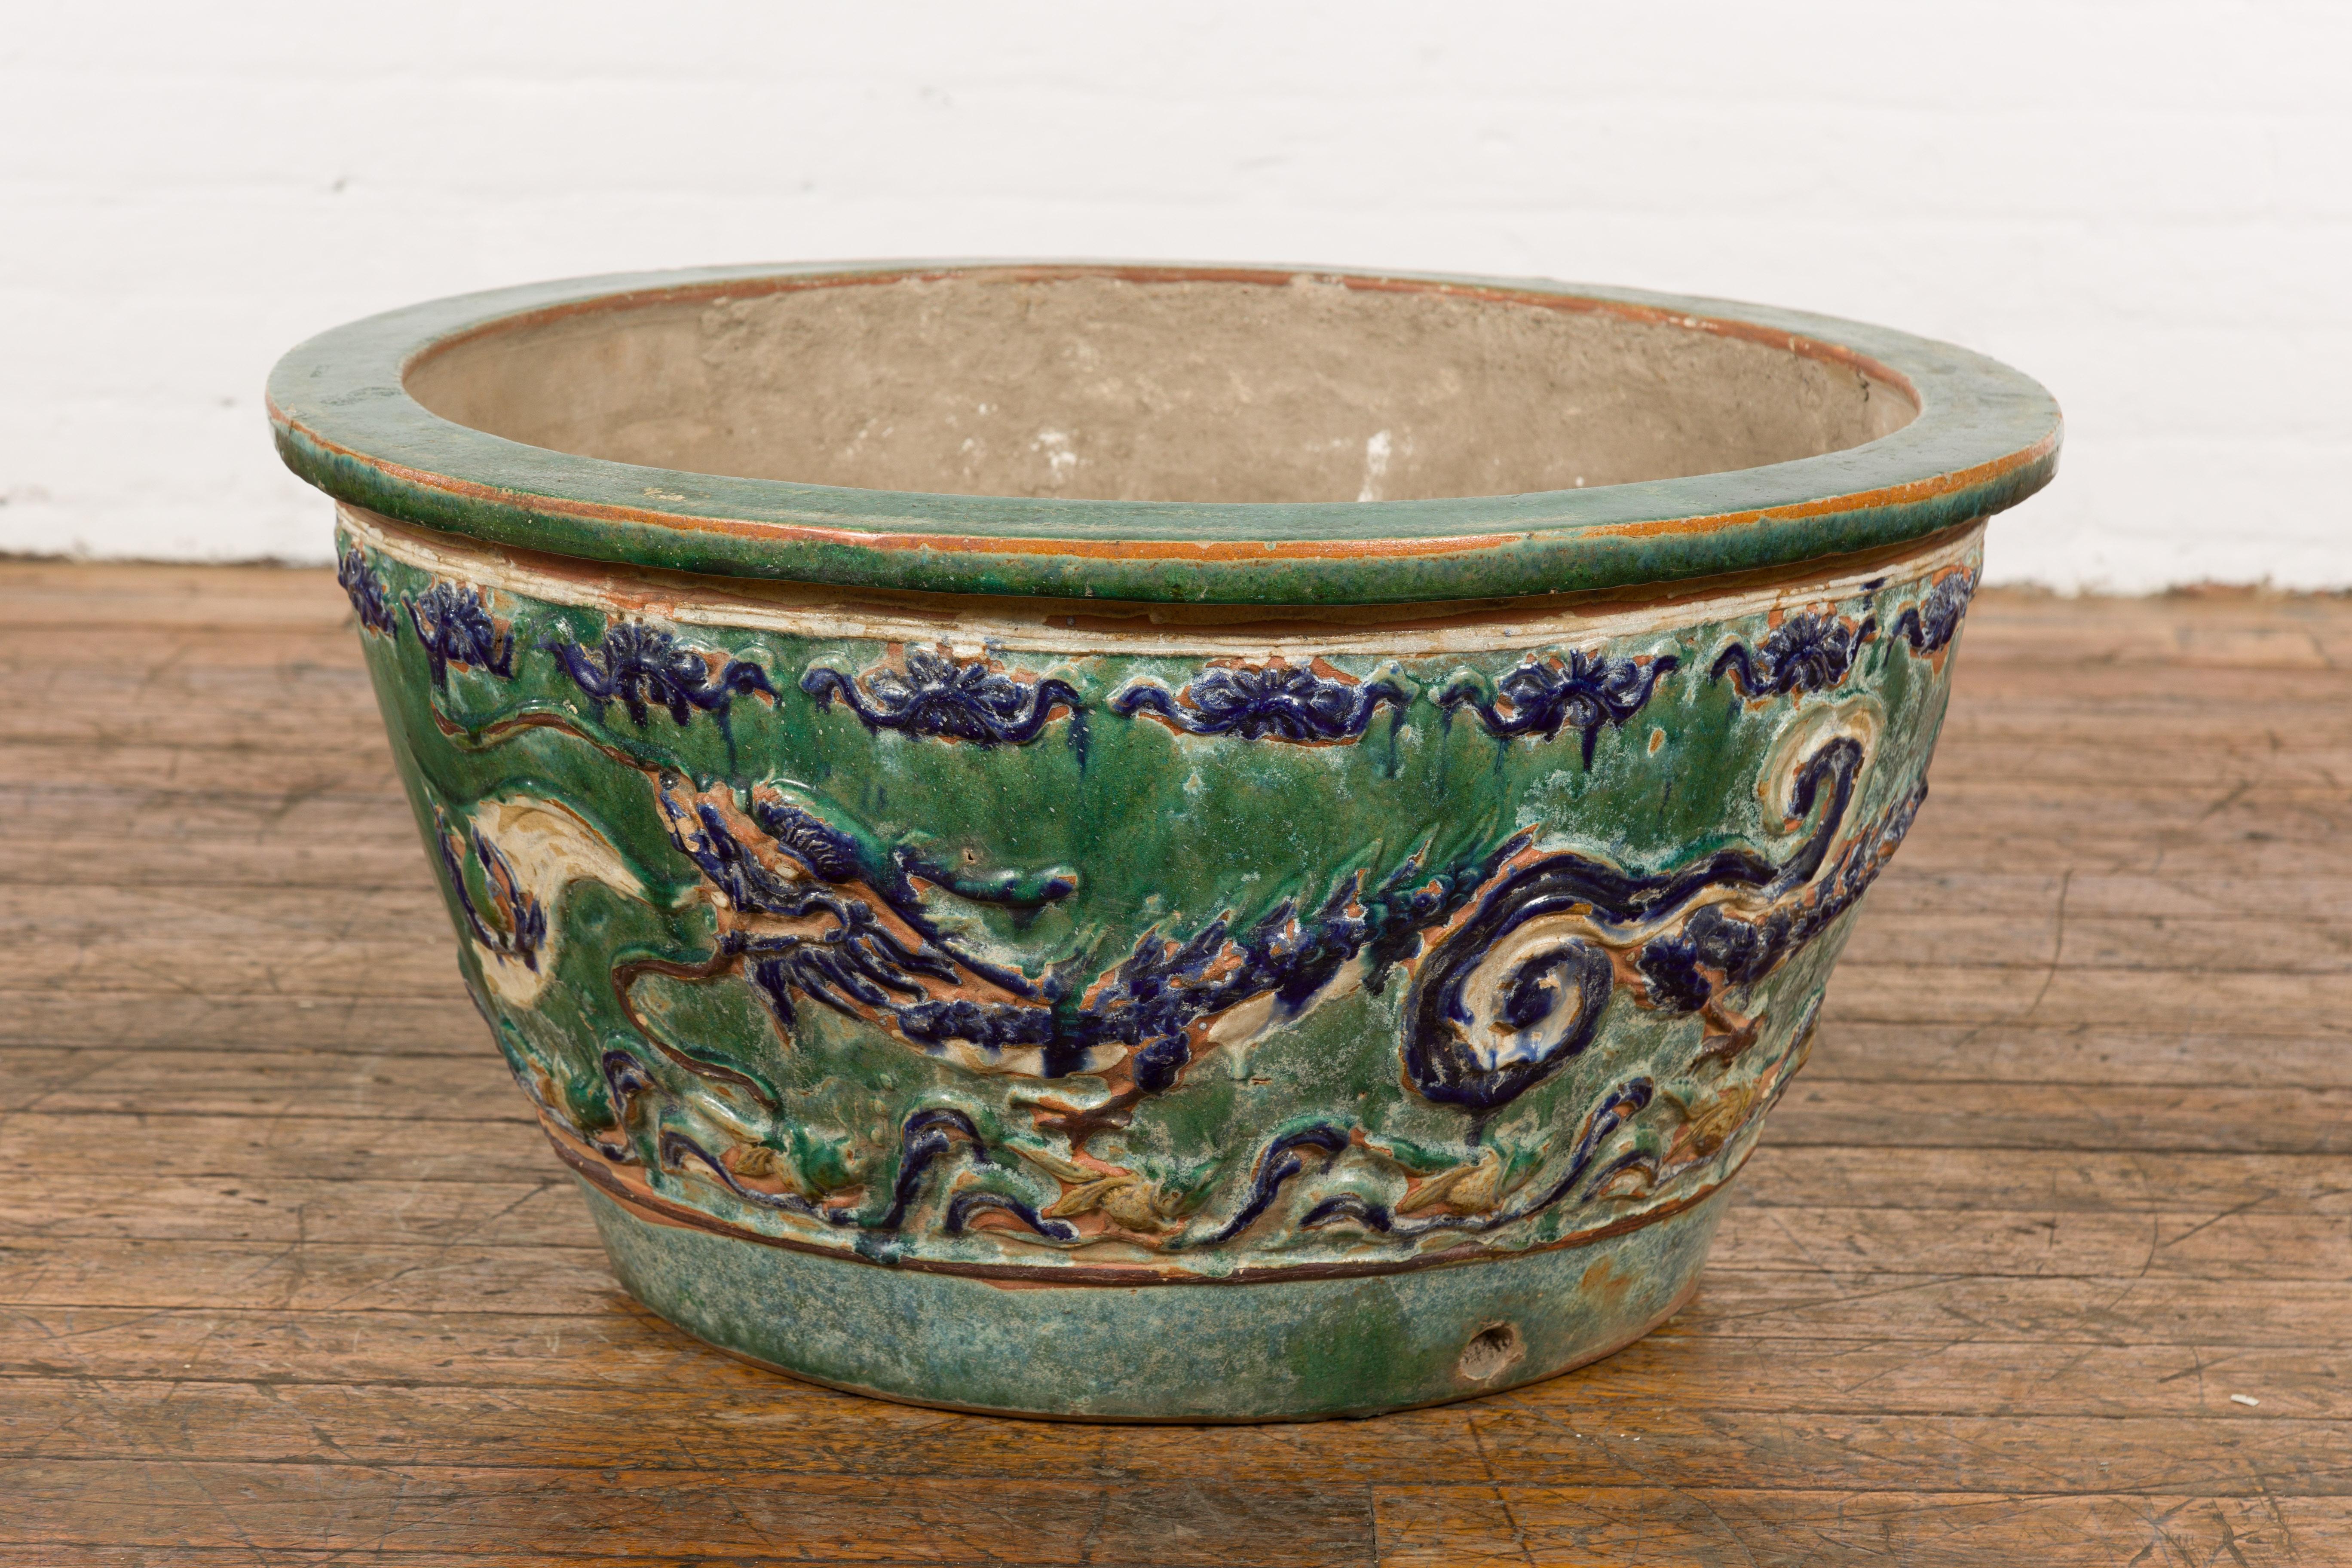 Glazed Large Green Antique Ceramic Planter with Blue Dragon Design